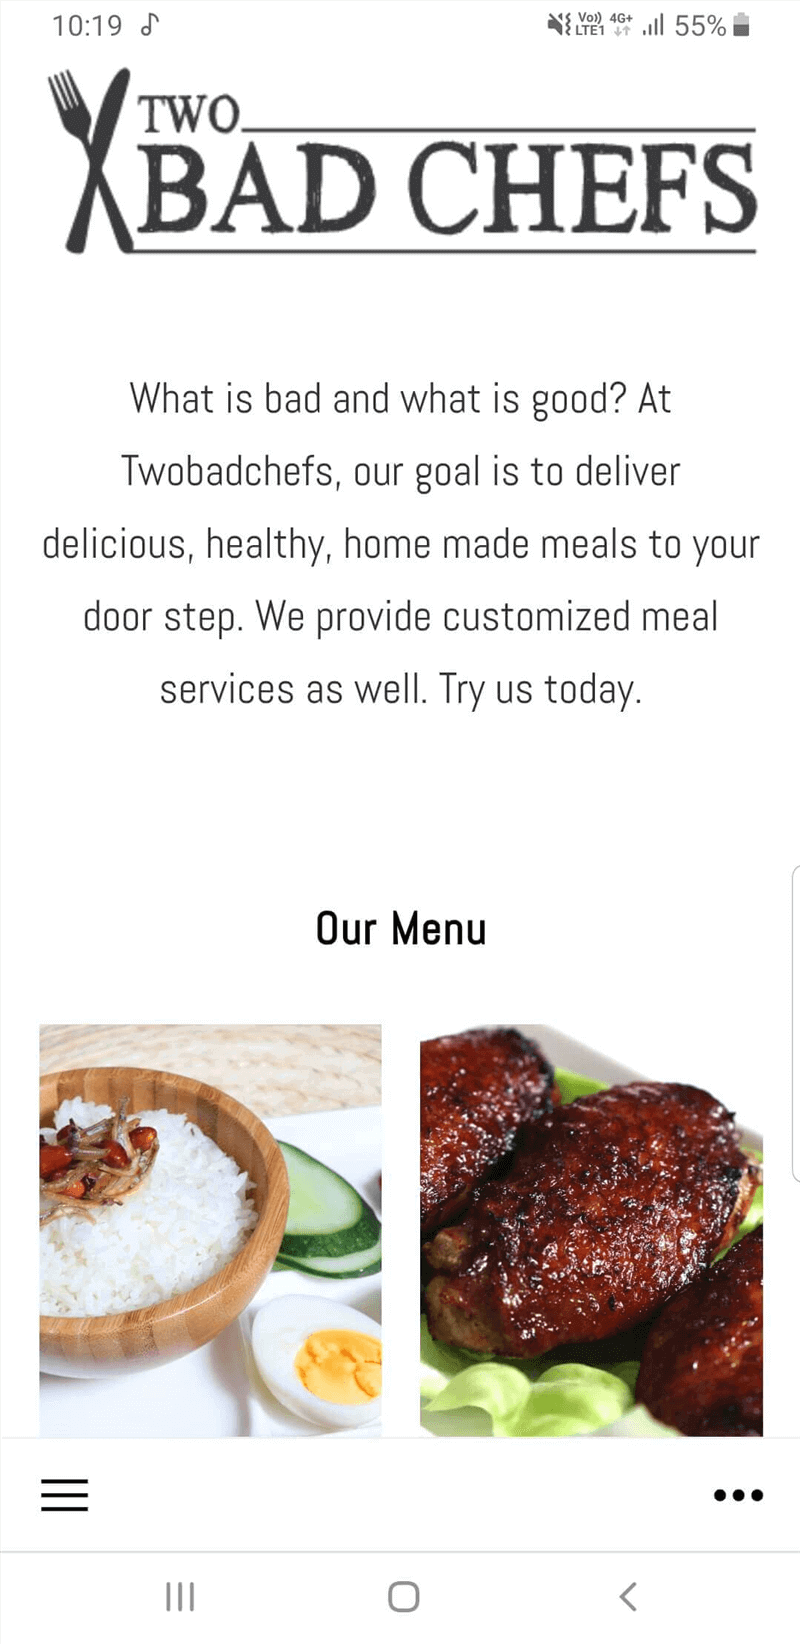 Food Website For Sale (www.twobadchefs.Com)